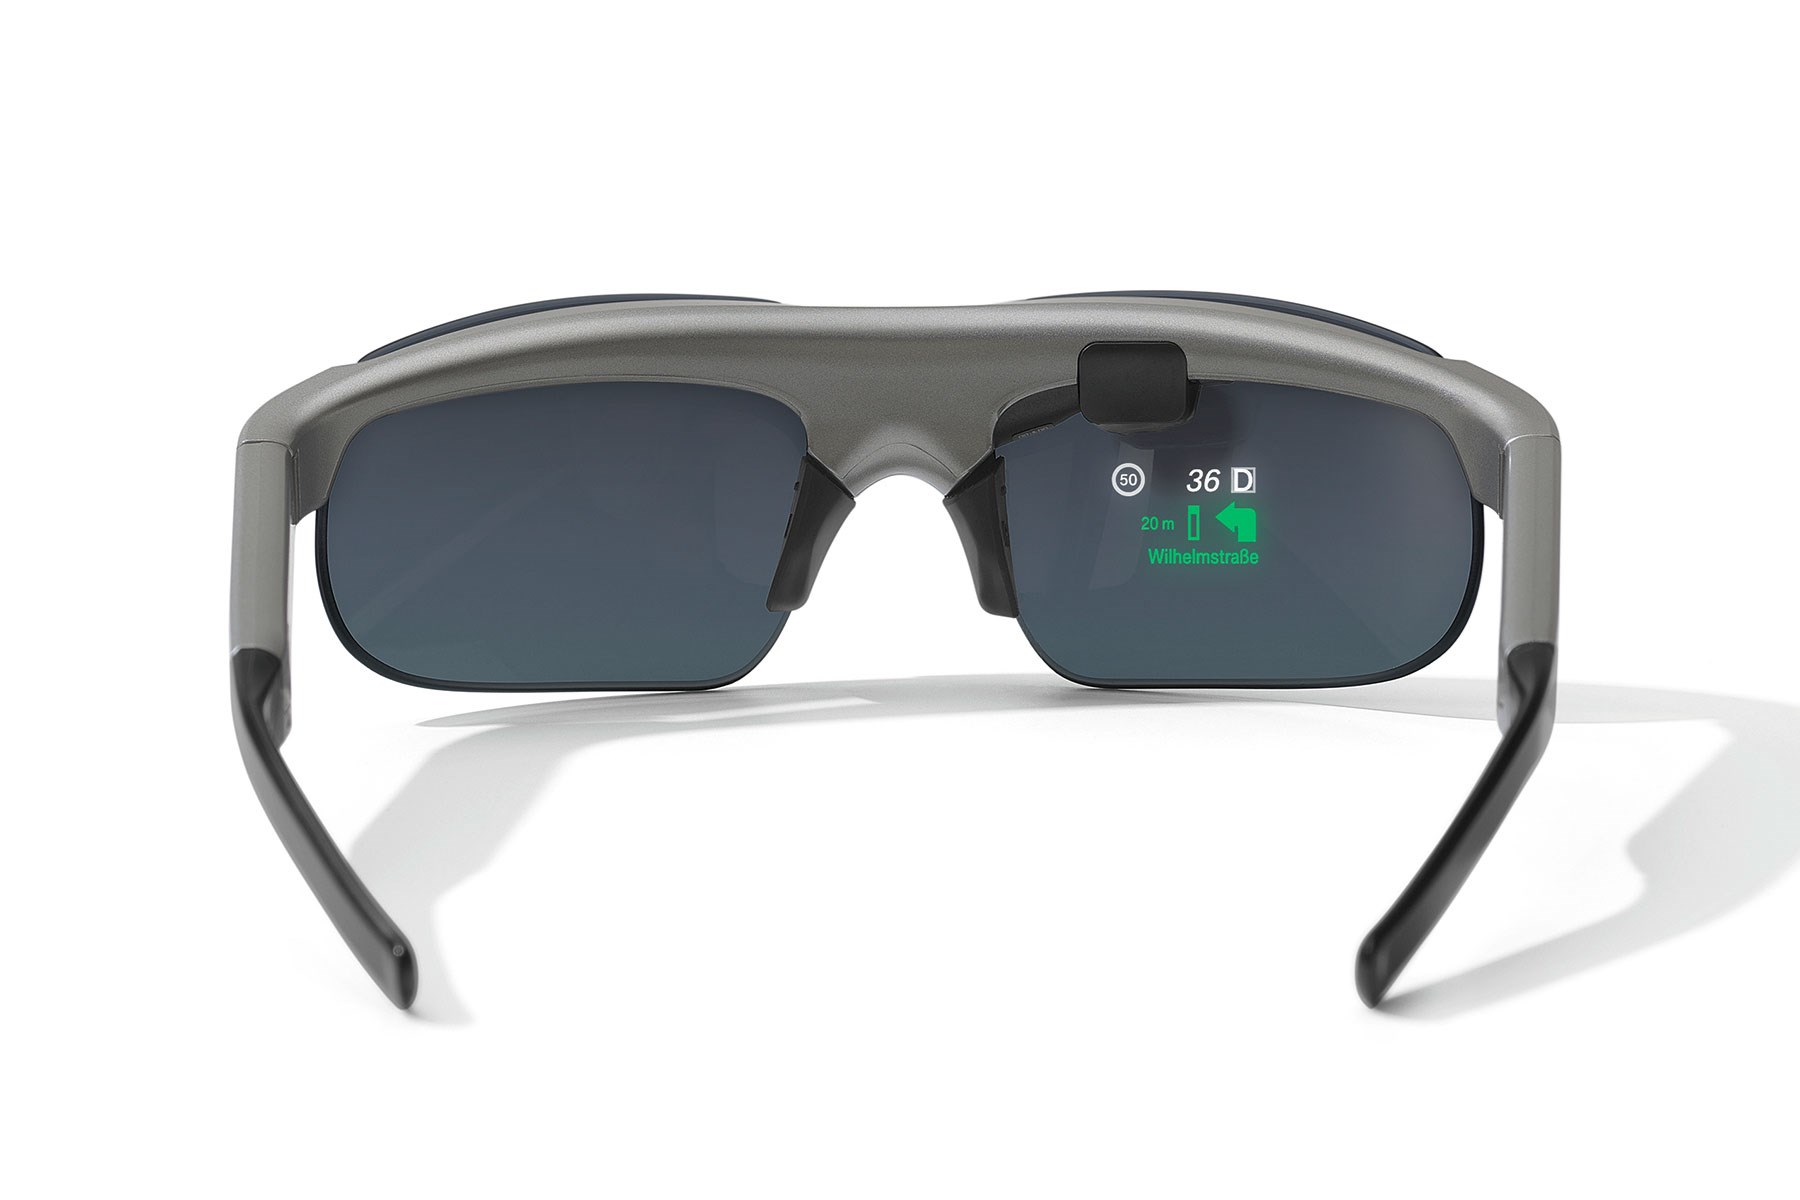 BMW ConnectedRide smartglasses bring head-up displays to eyewear